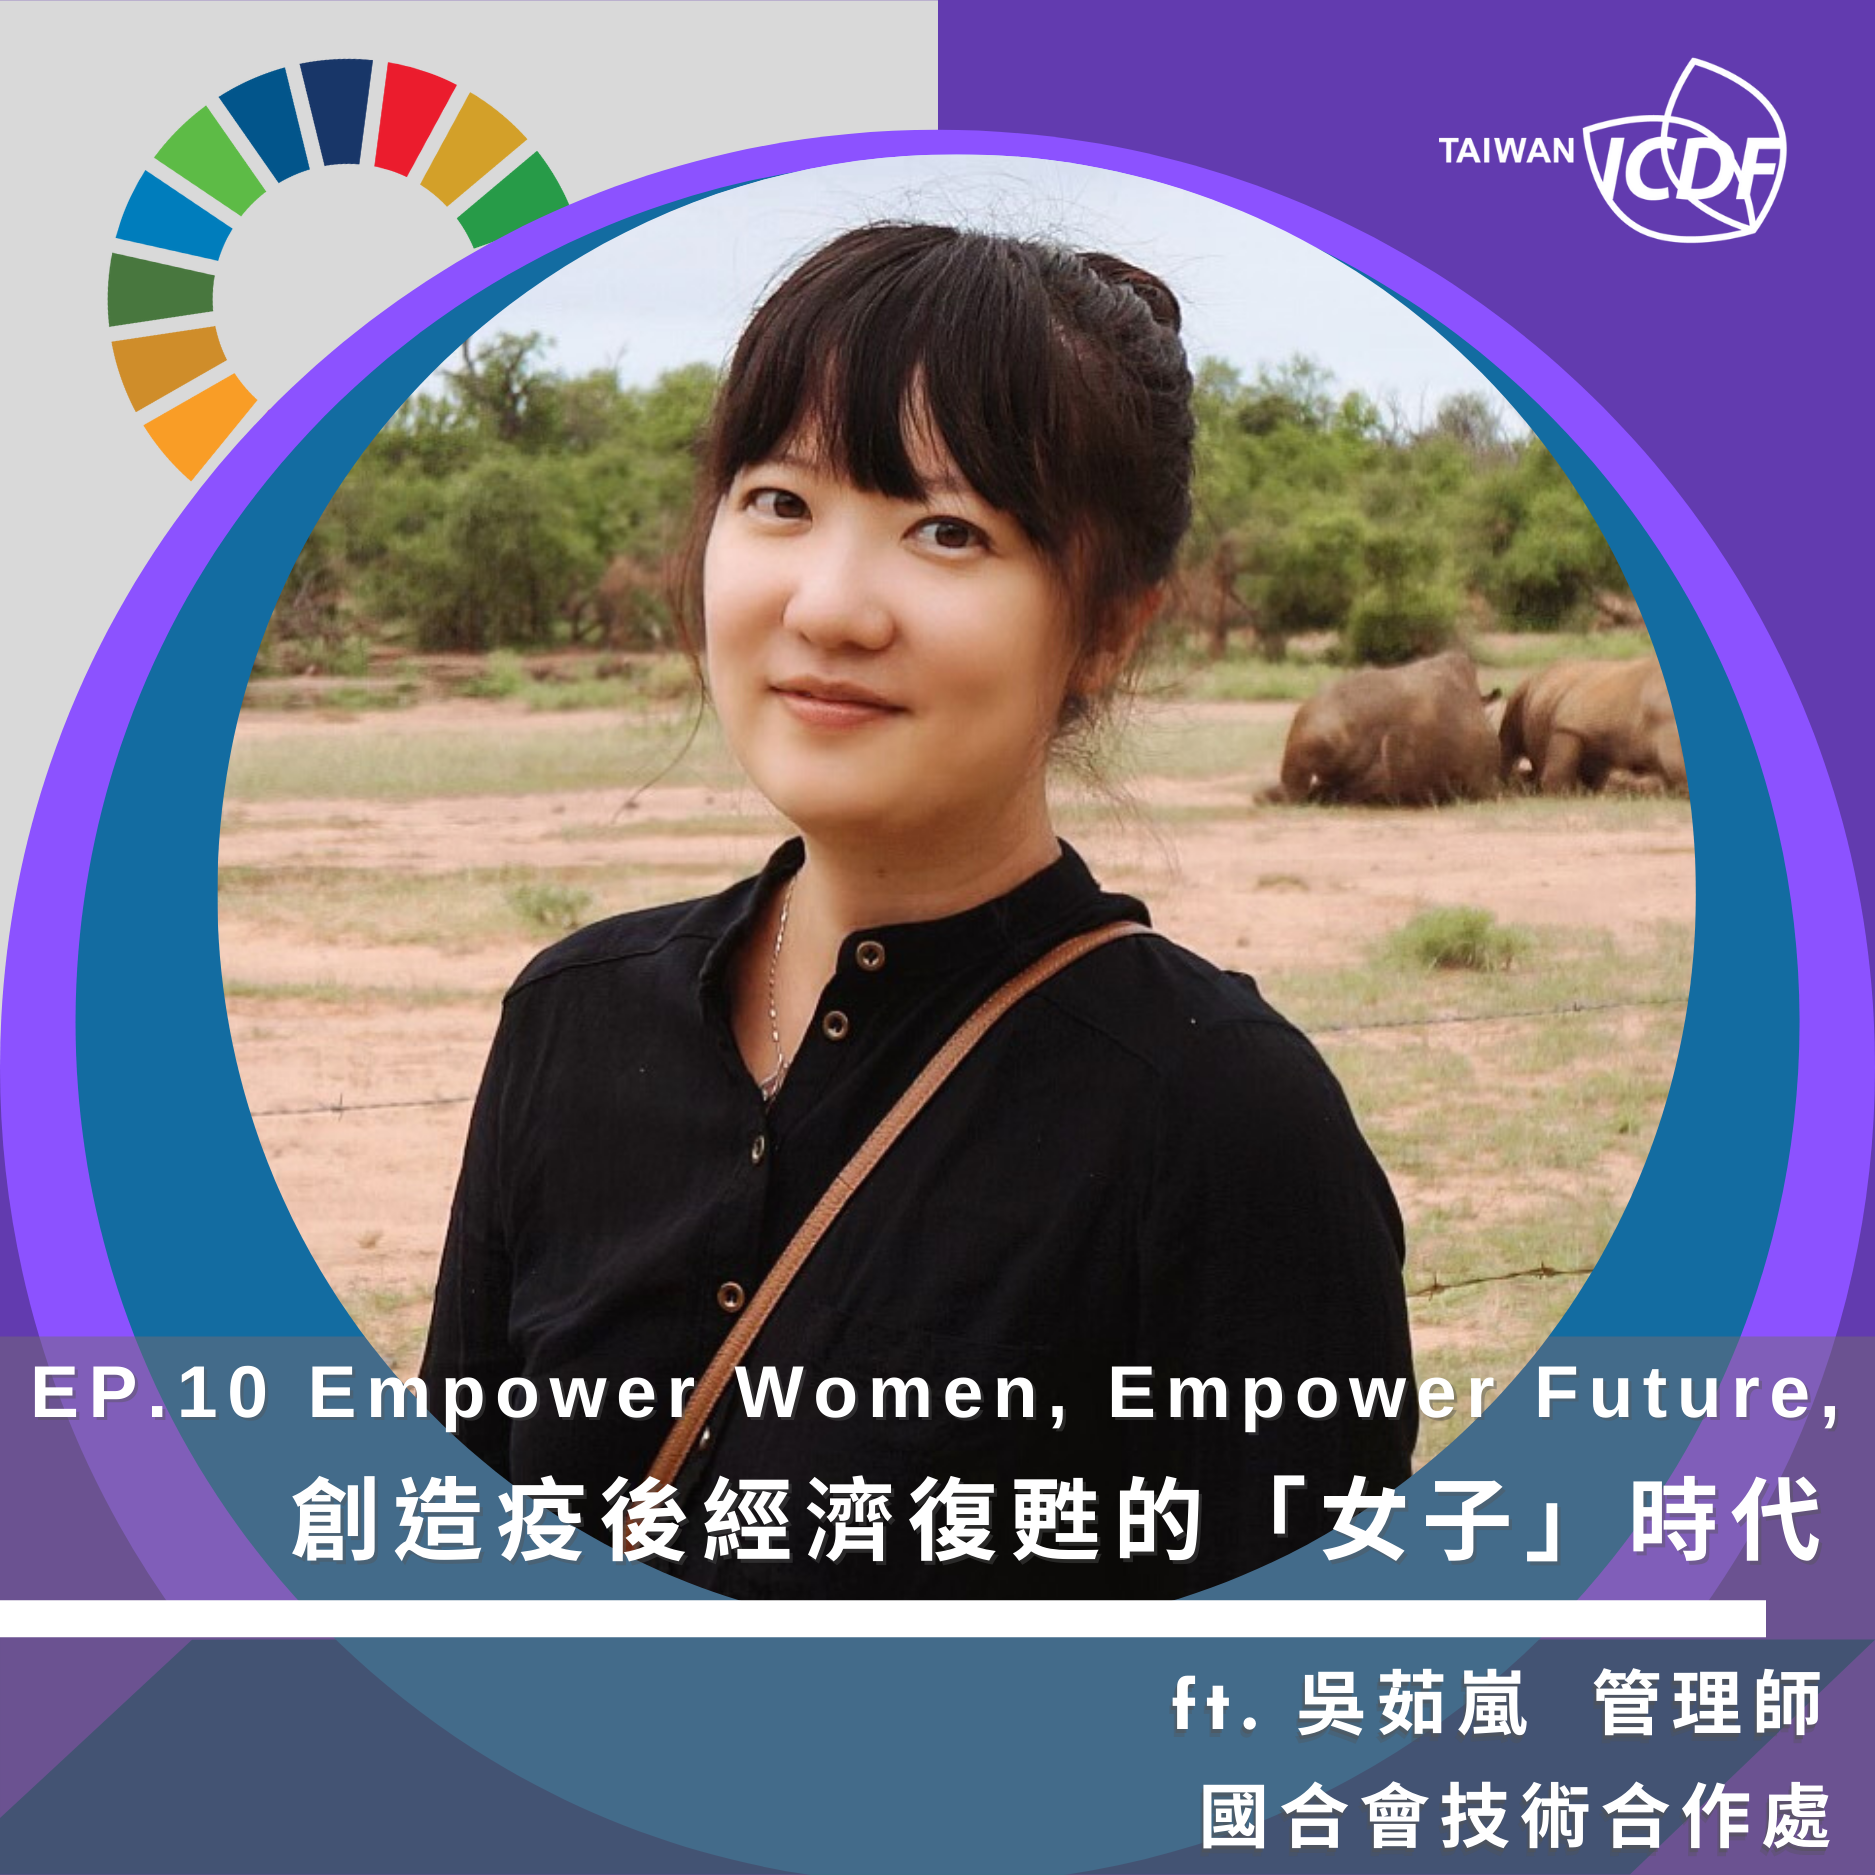 【Empower Women, Empower Future！創造疫後經濟復甦的「女子」時代】《欸(AID)，來自台灣援外的聲音》說乎你知| ft. 國合會技術合作處吳茹嵐管理師